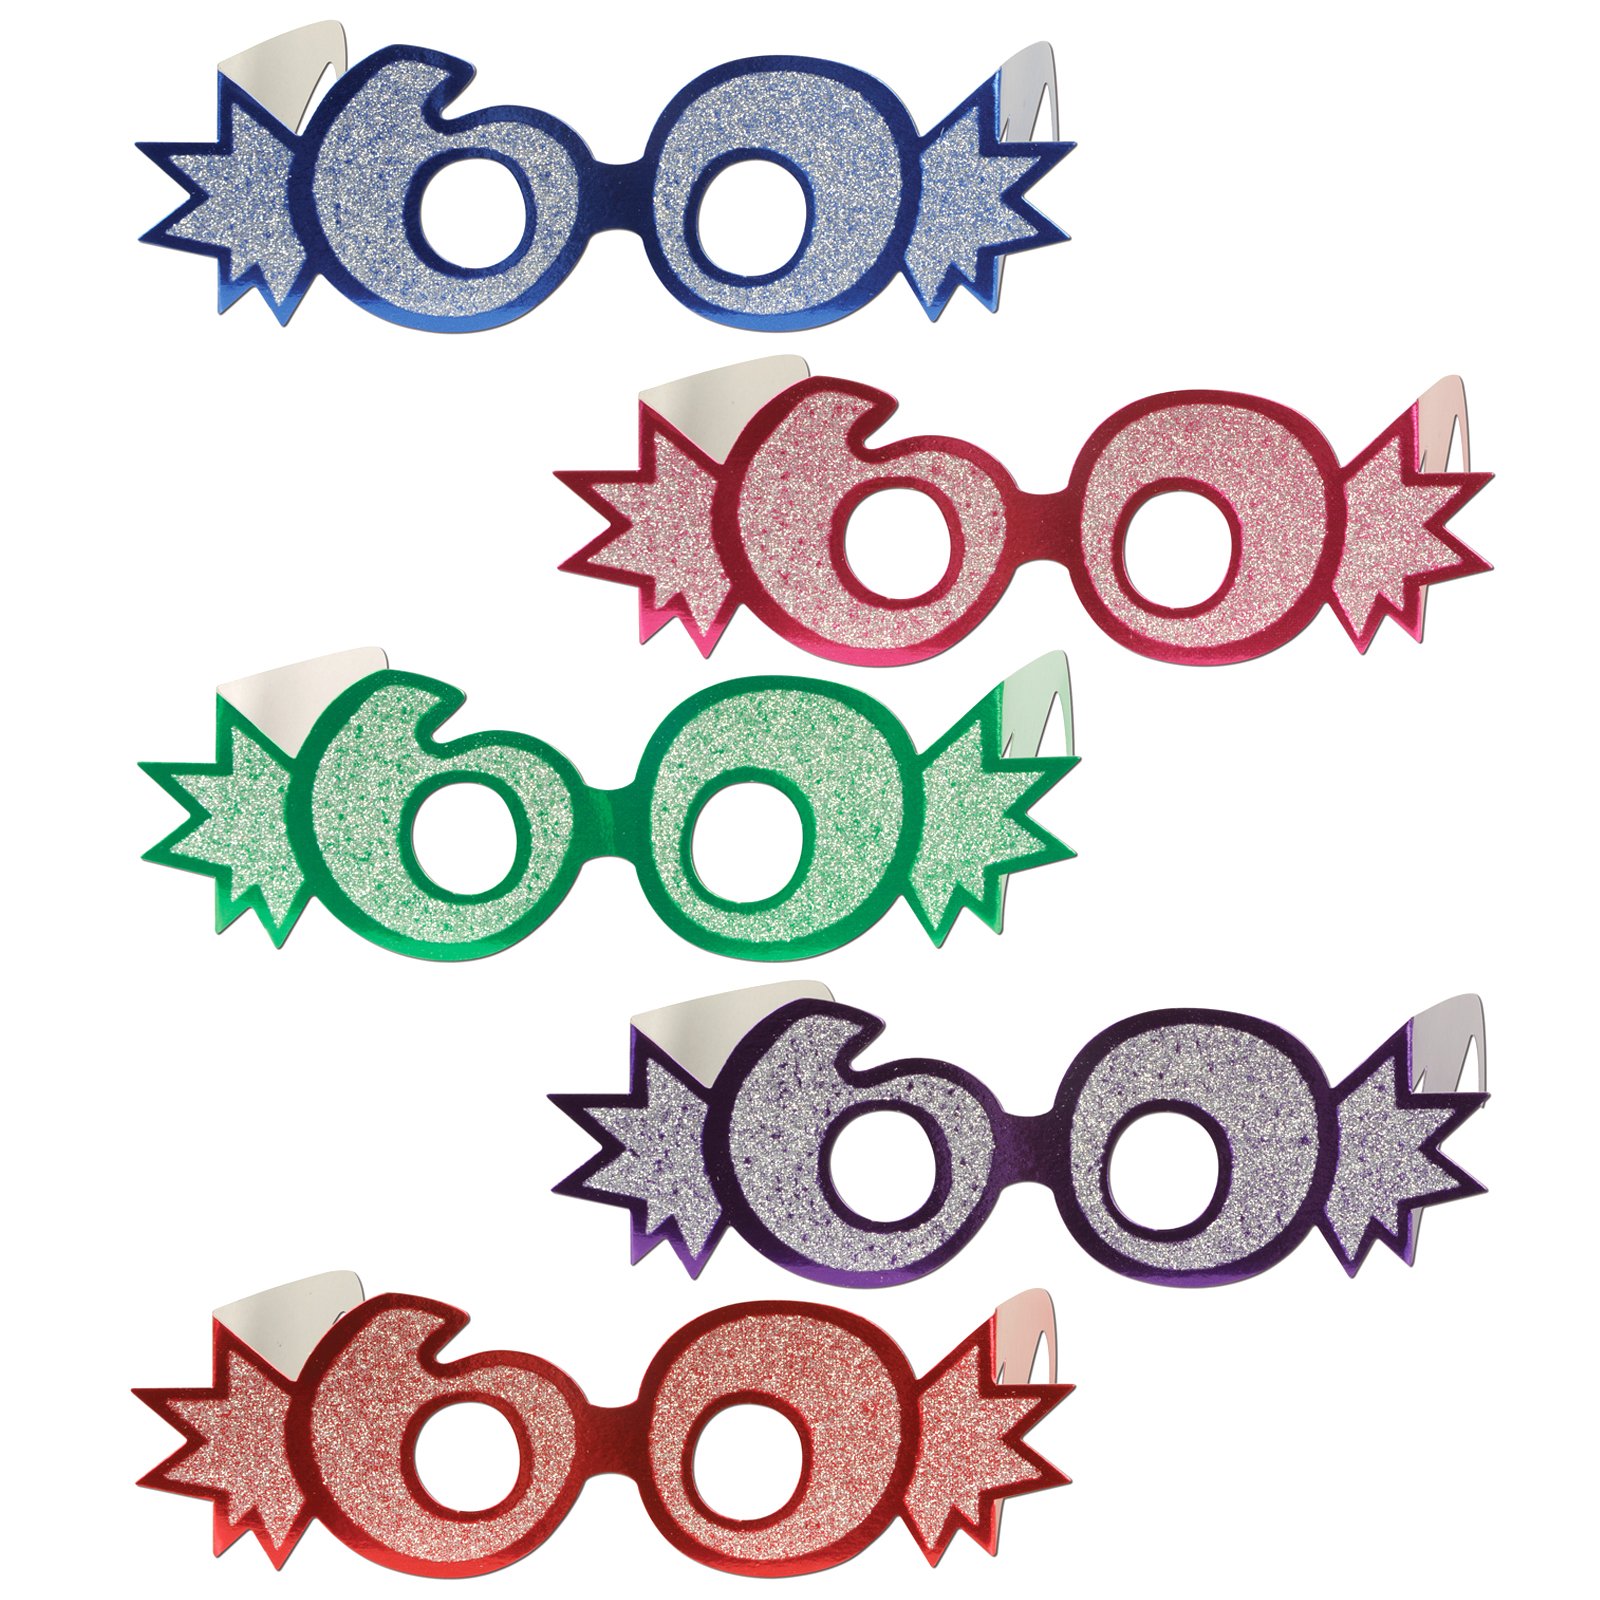 Glittered Foil Eyeglasses "60" Asst. (1 count) - Click Image to Close